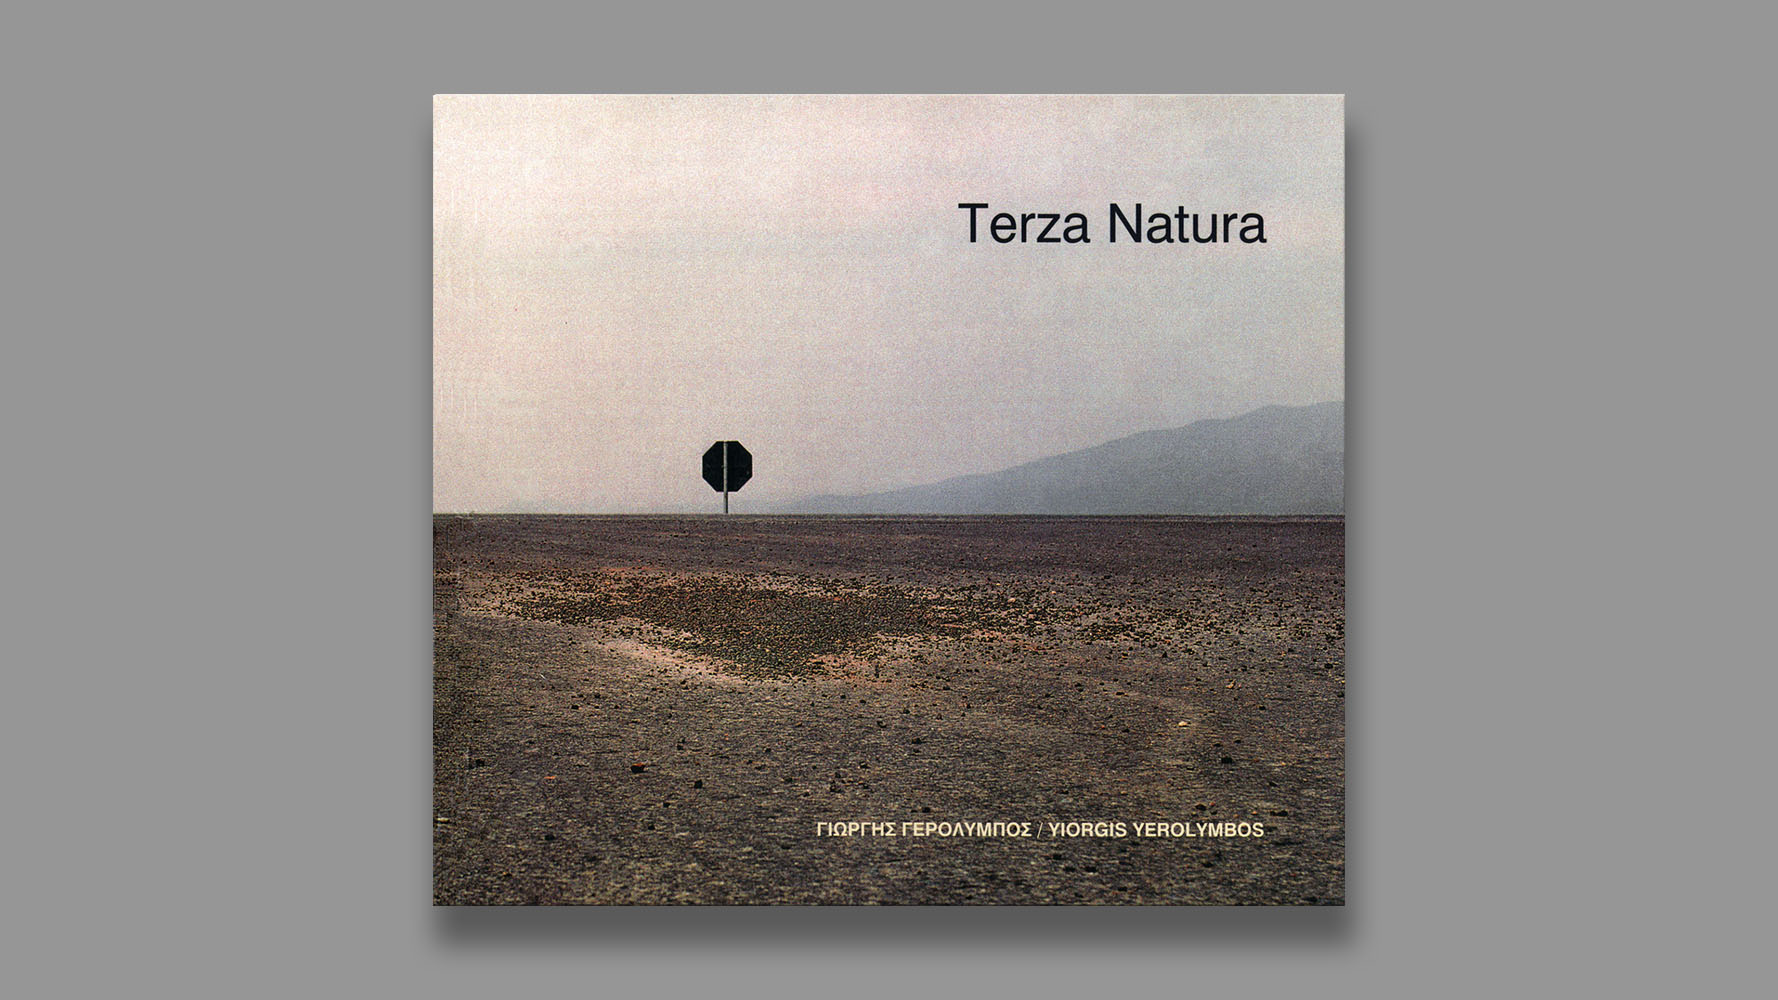 Terza Natura, exhibition catalogue, self published, 2003